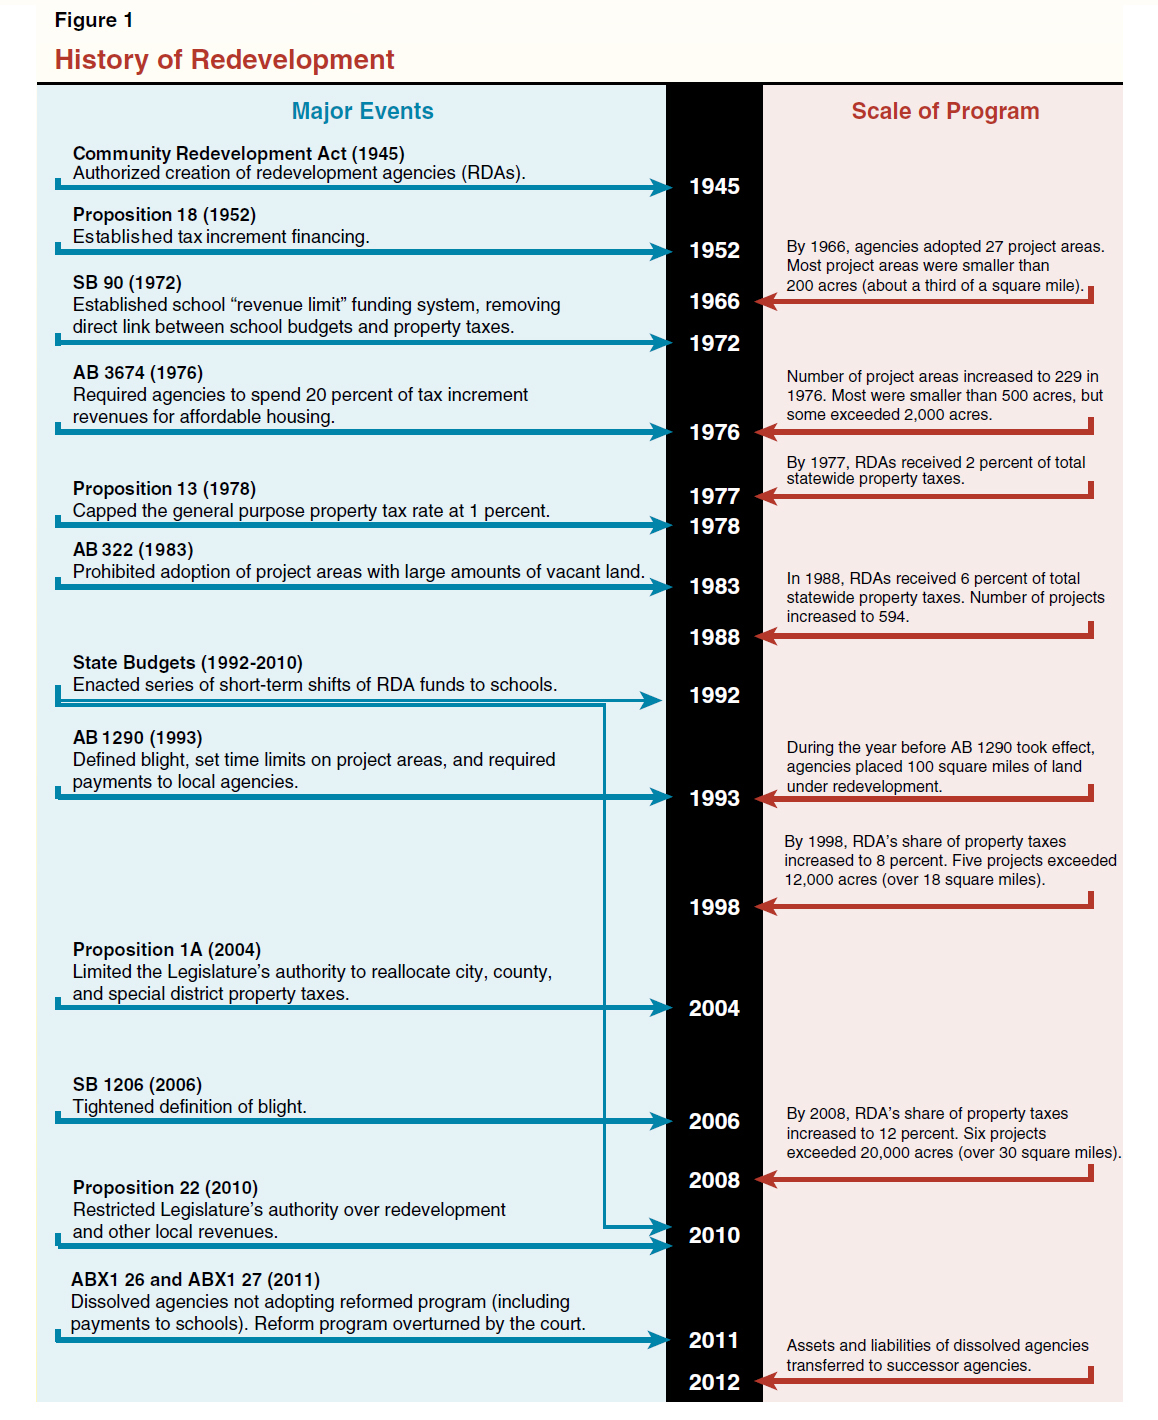 Figure 1 - History of Redevelopment